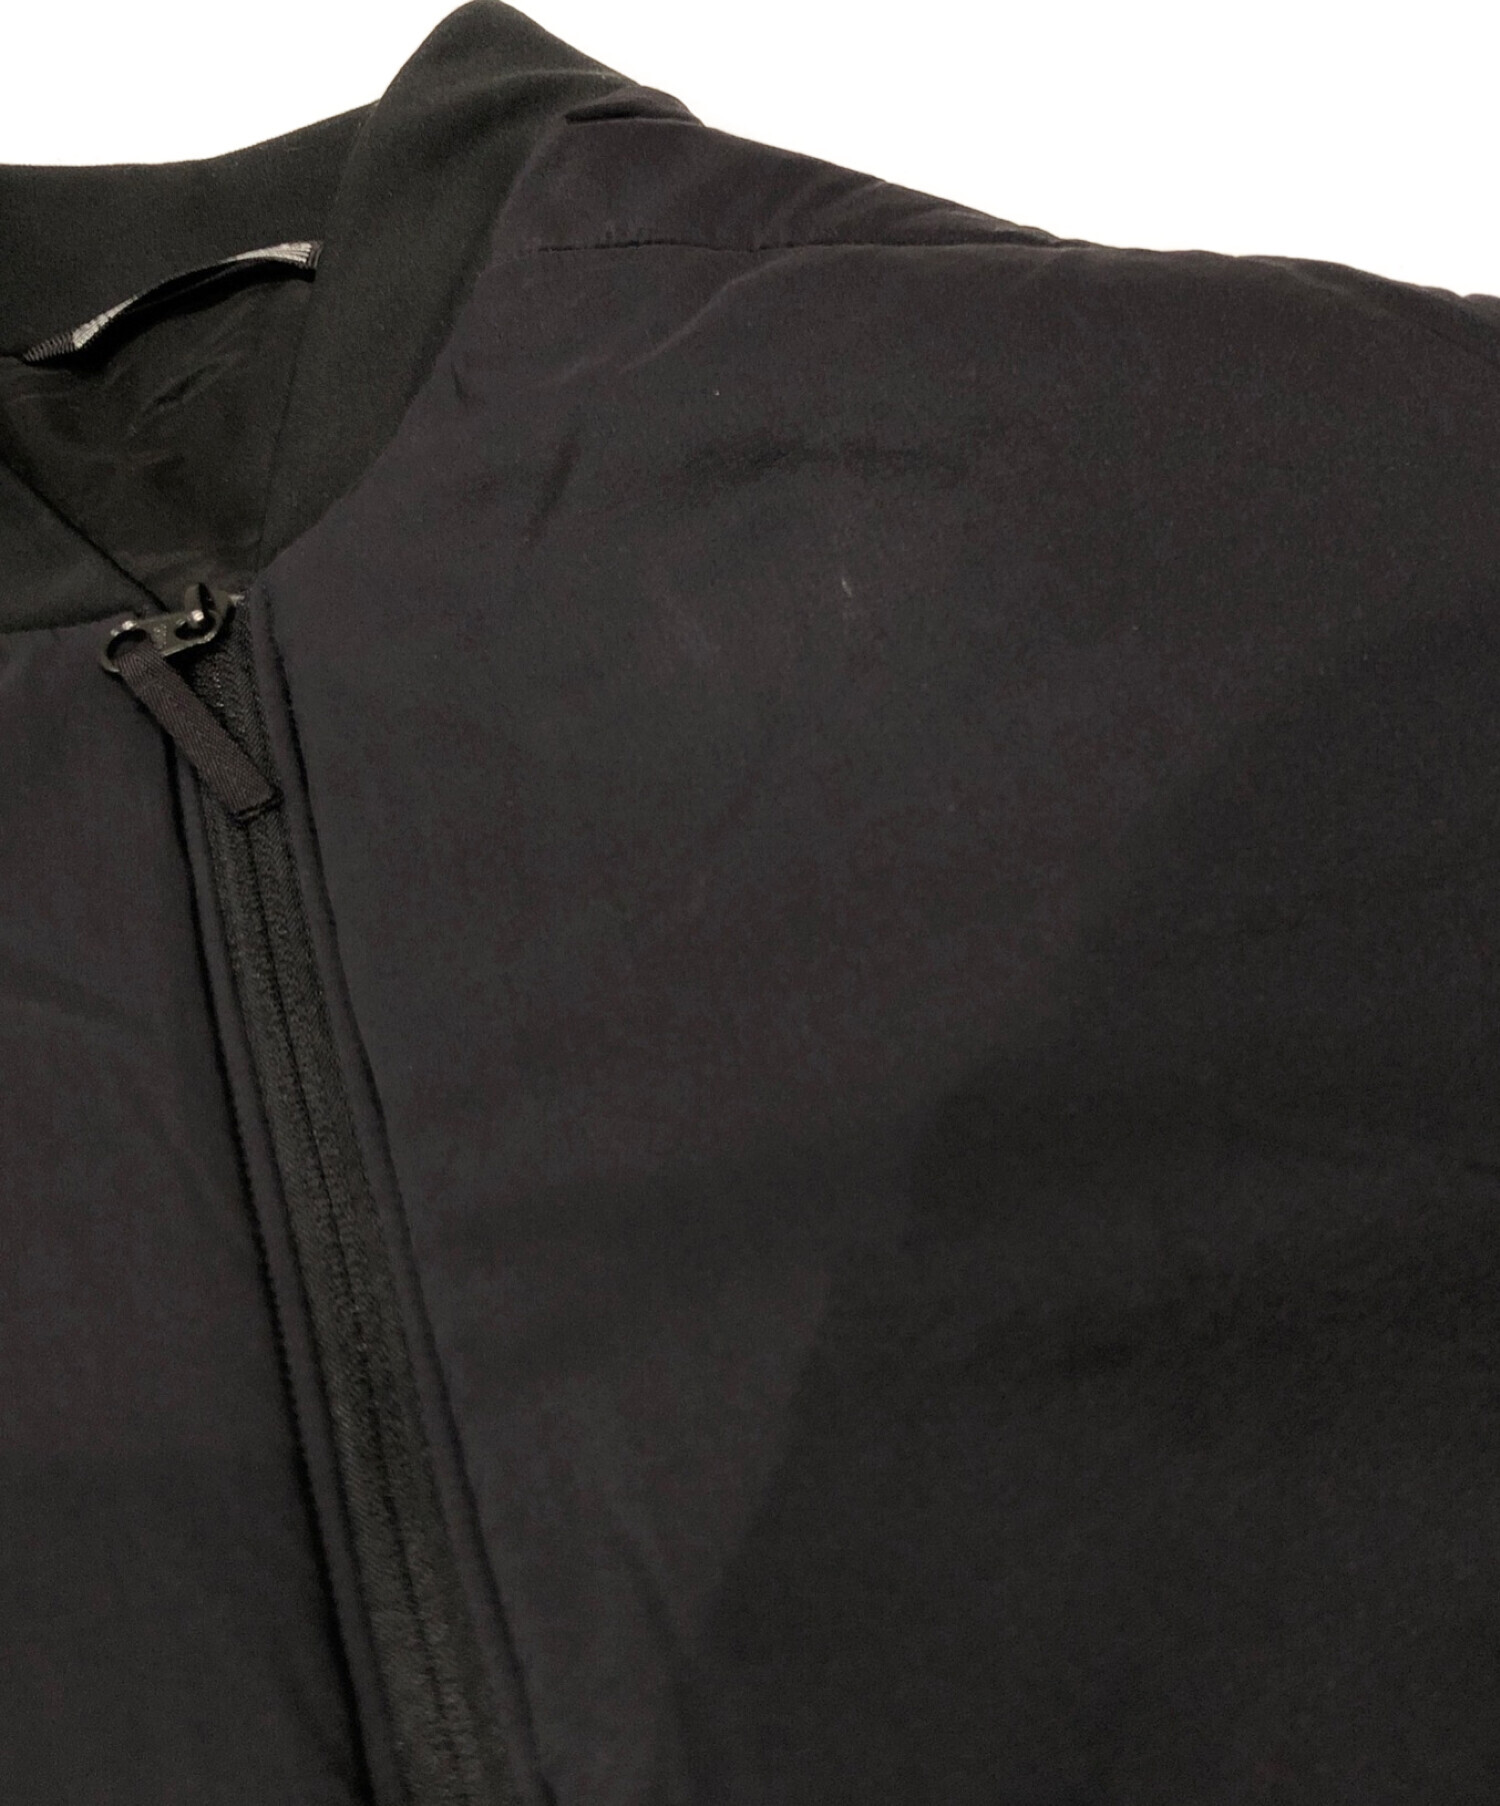 ARC'TERYX (アークテリクス) セトンジャケット ブラック サイズ:S